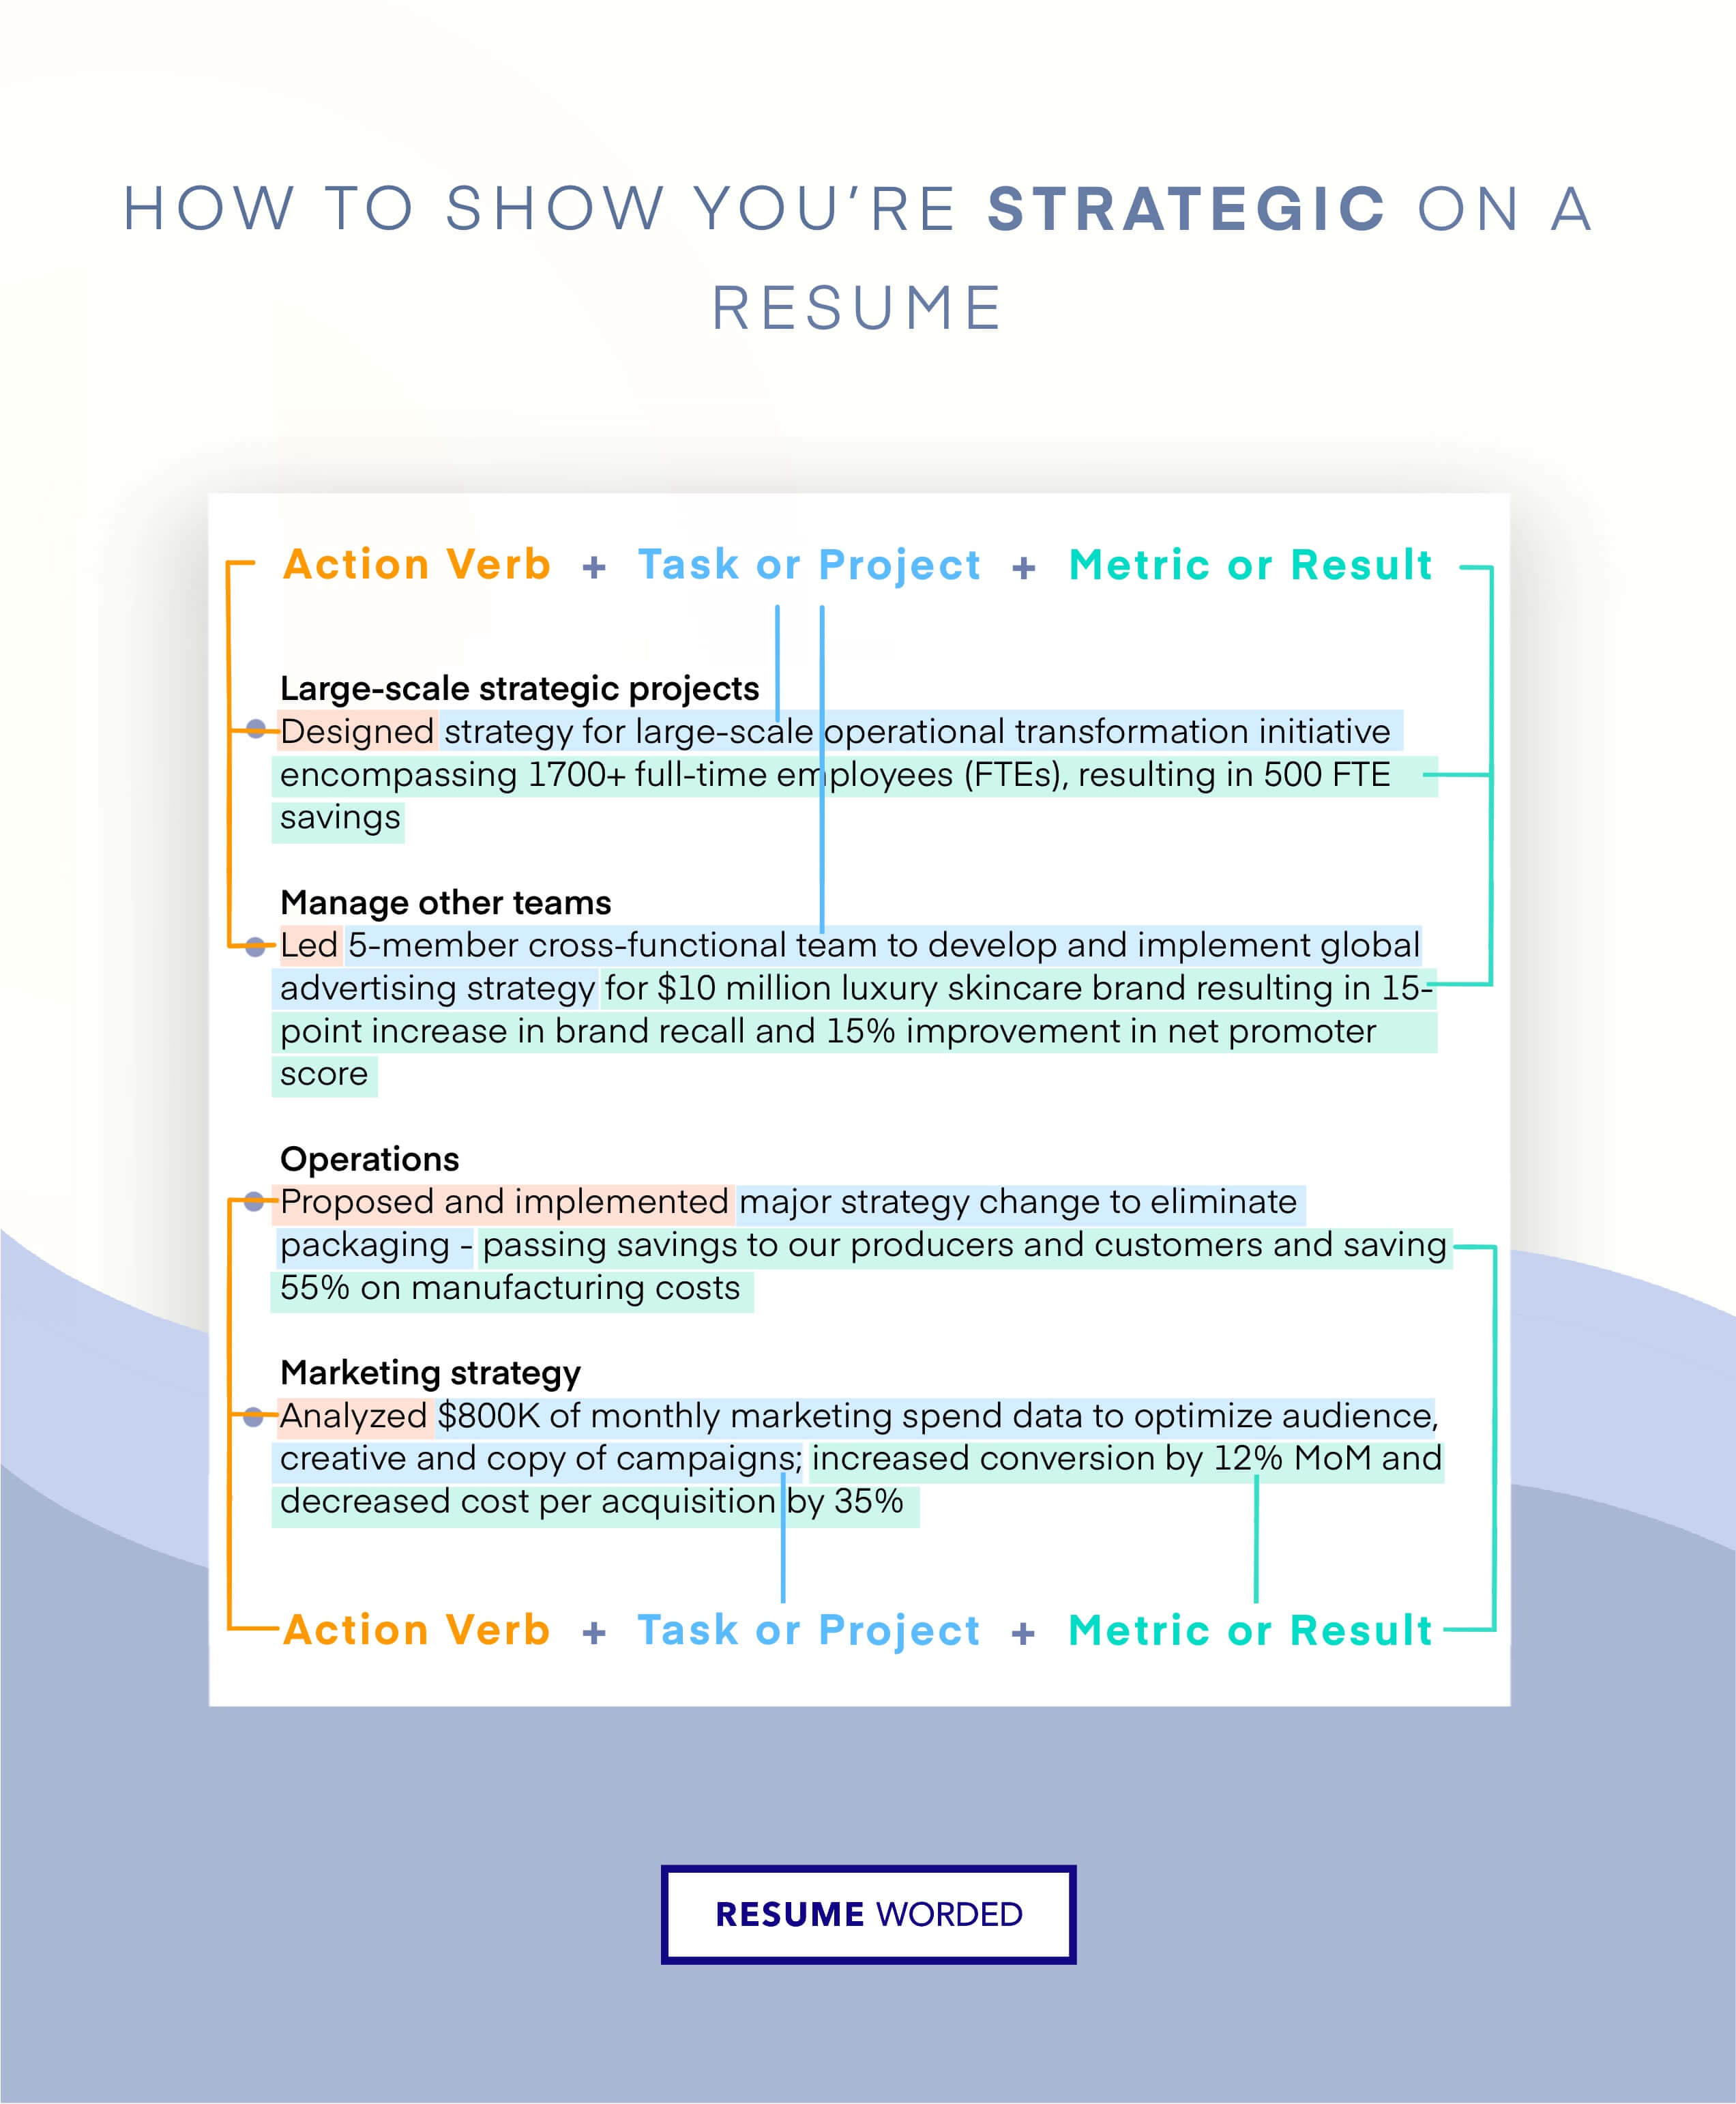 Showcase your strategic planning skills - Director of Operations CV